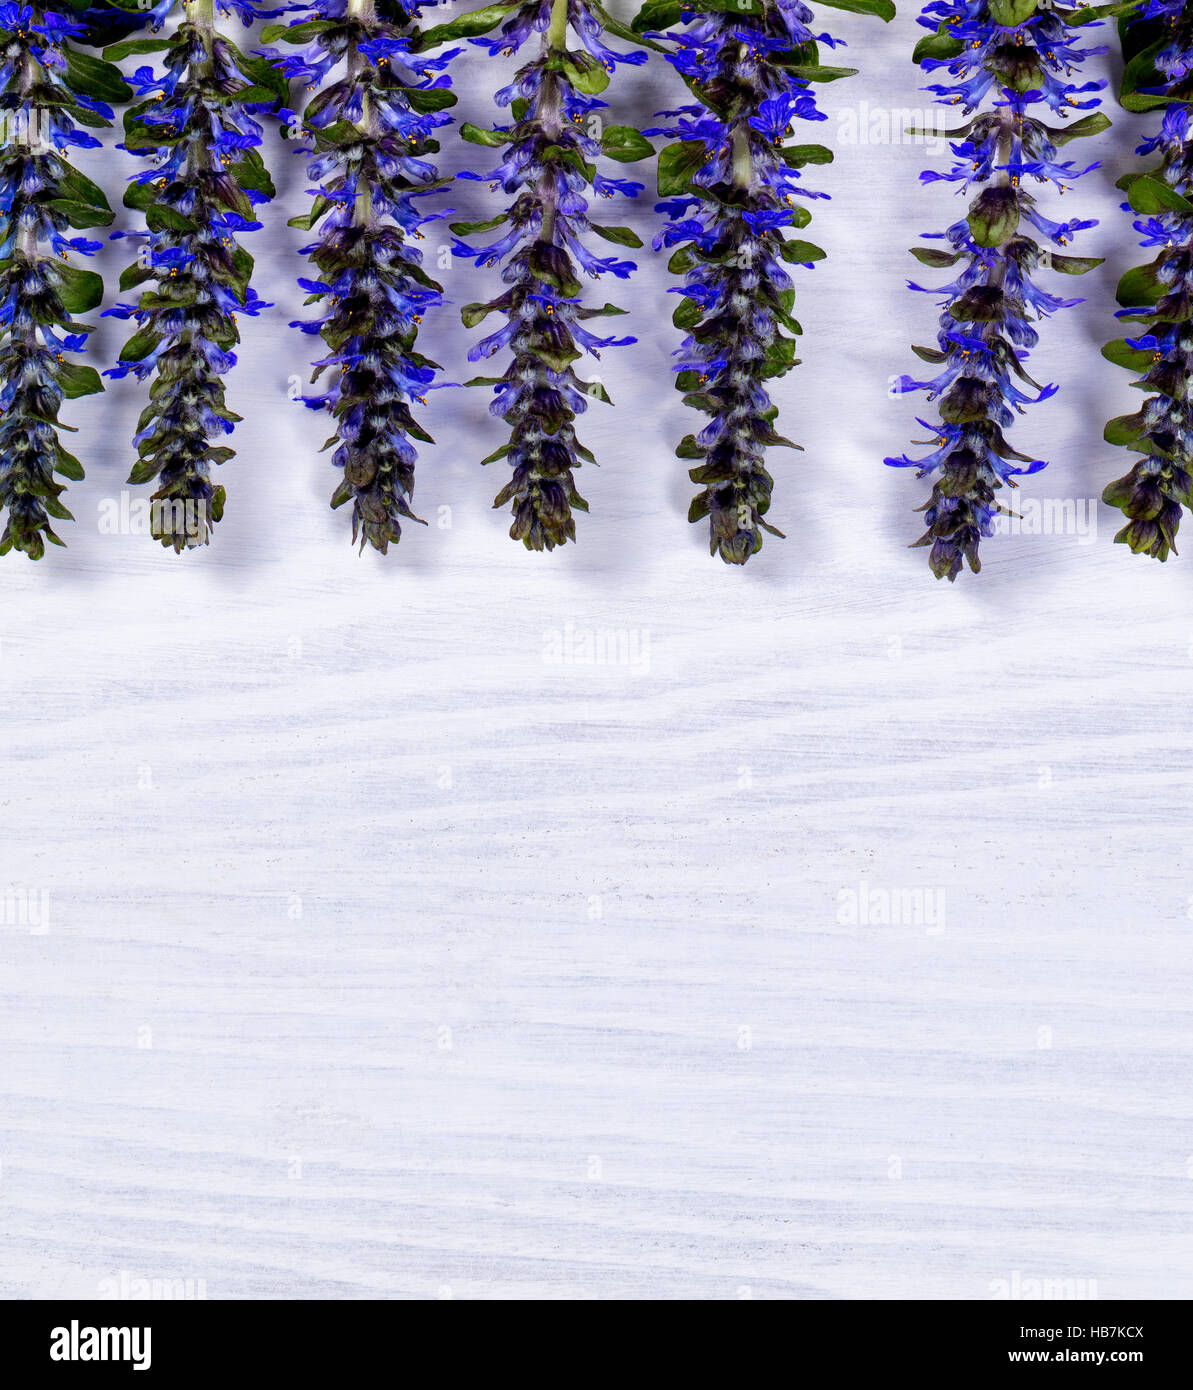 Wild blue flowers on white wood background Stock Photo